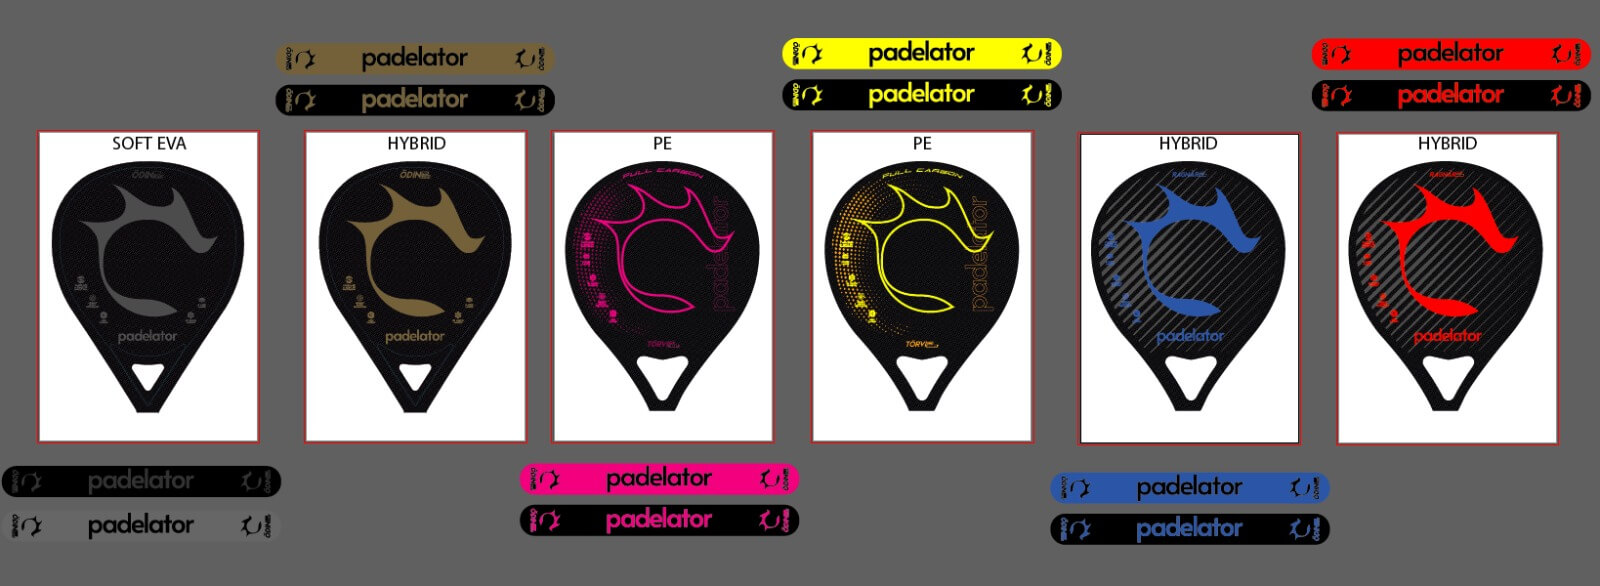 Comparison of padel rackets